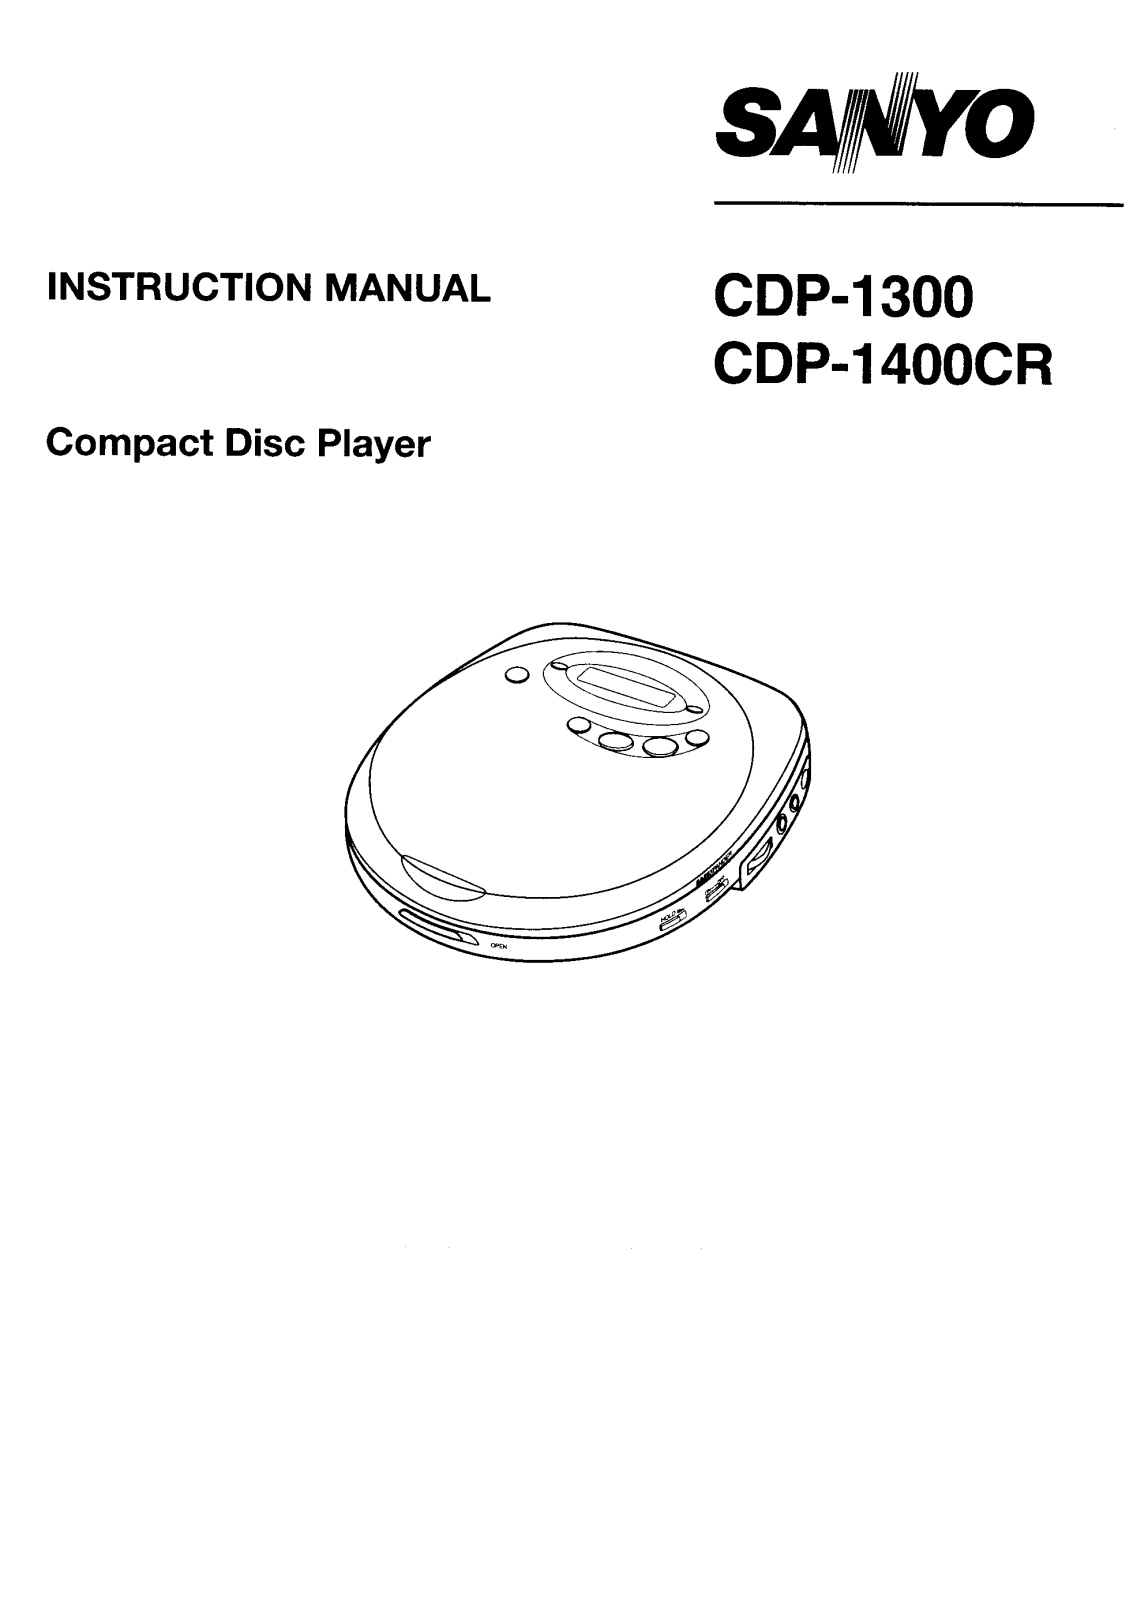 Sanyo CDP-1300, CDP-1400CR Instruction Manual